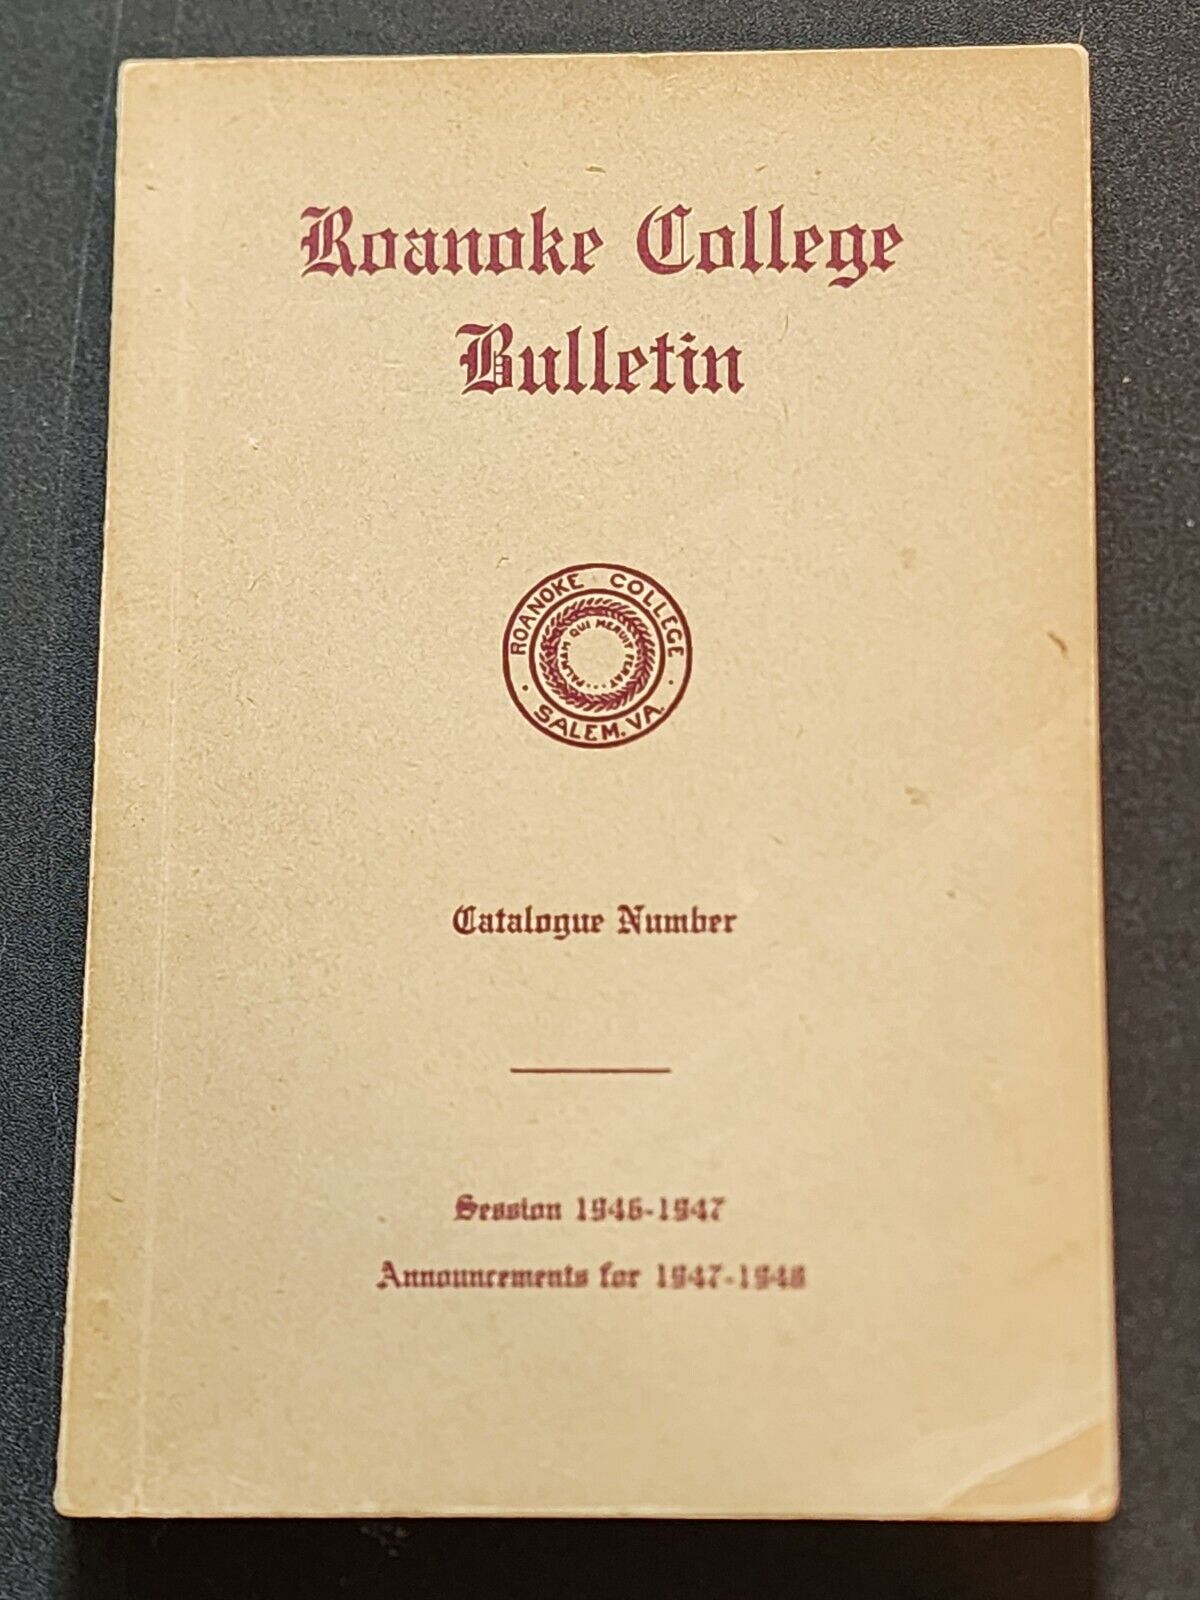 [Vintage] Roanoke College Bulletin 1946-1948 Salem, Virginia 105th Session